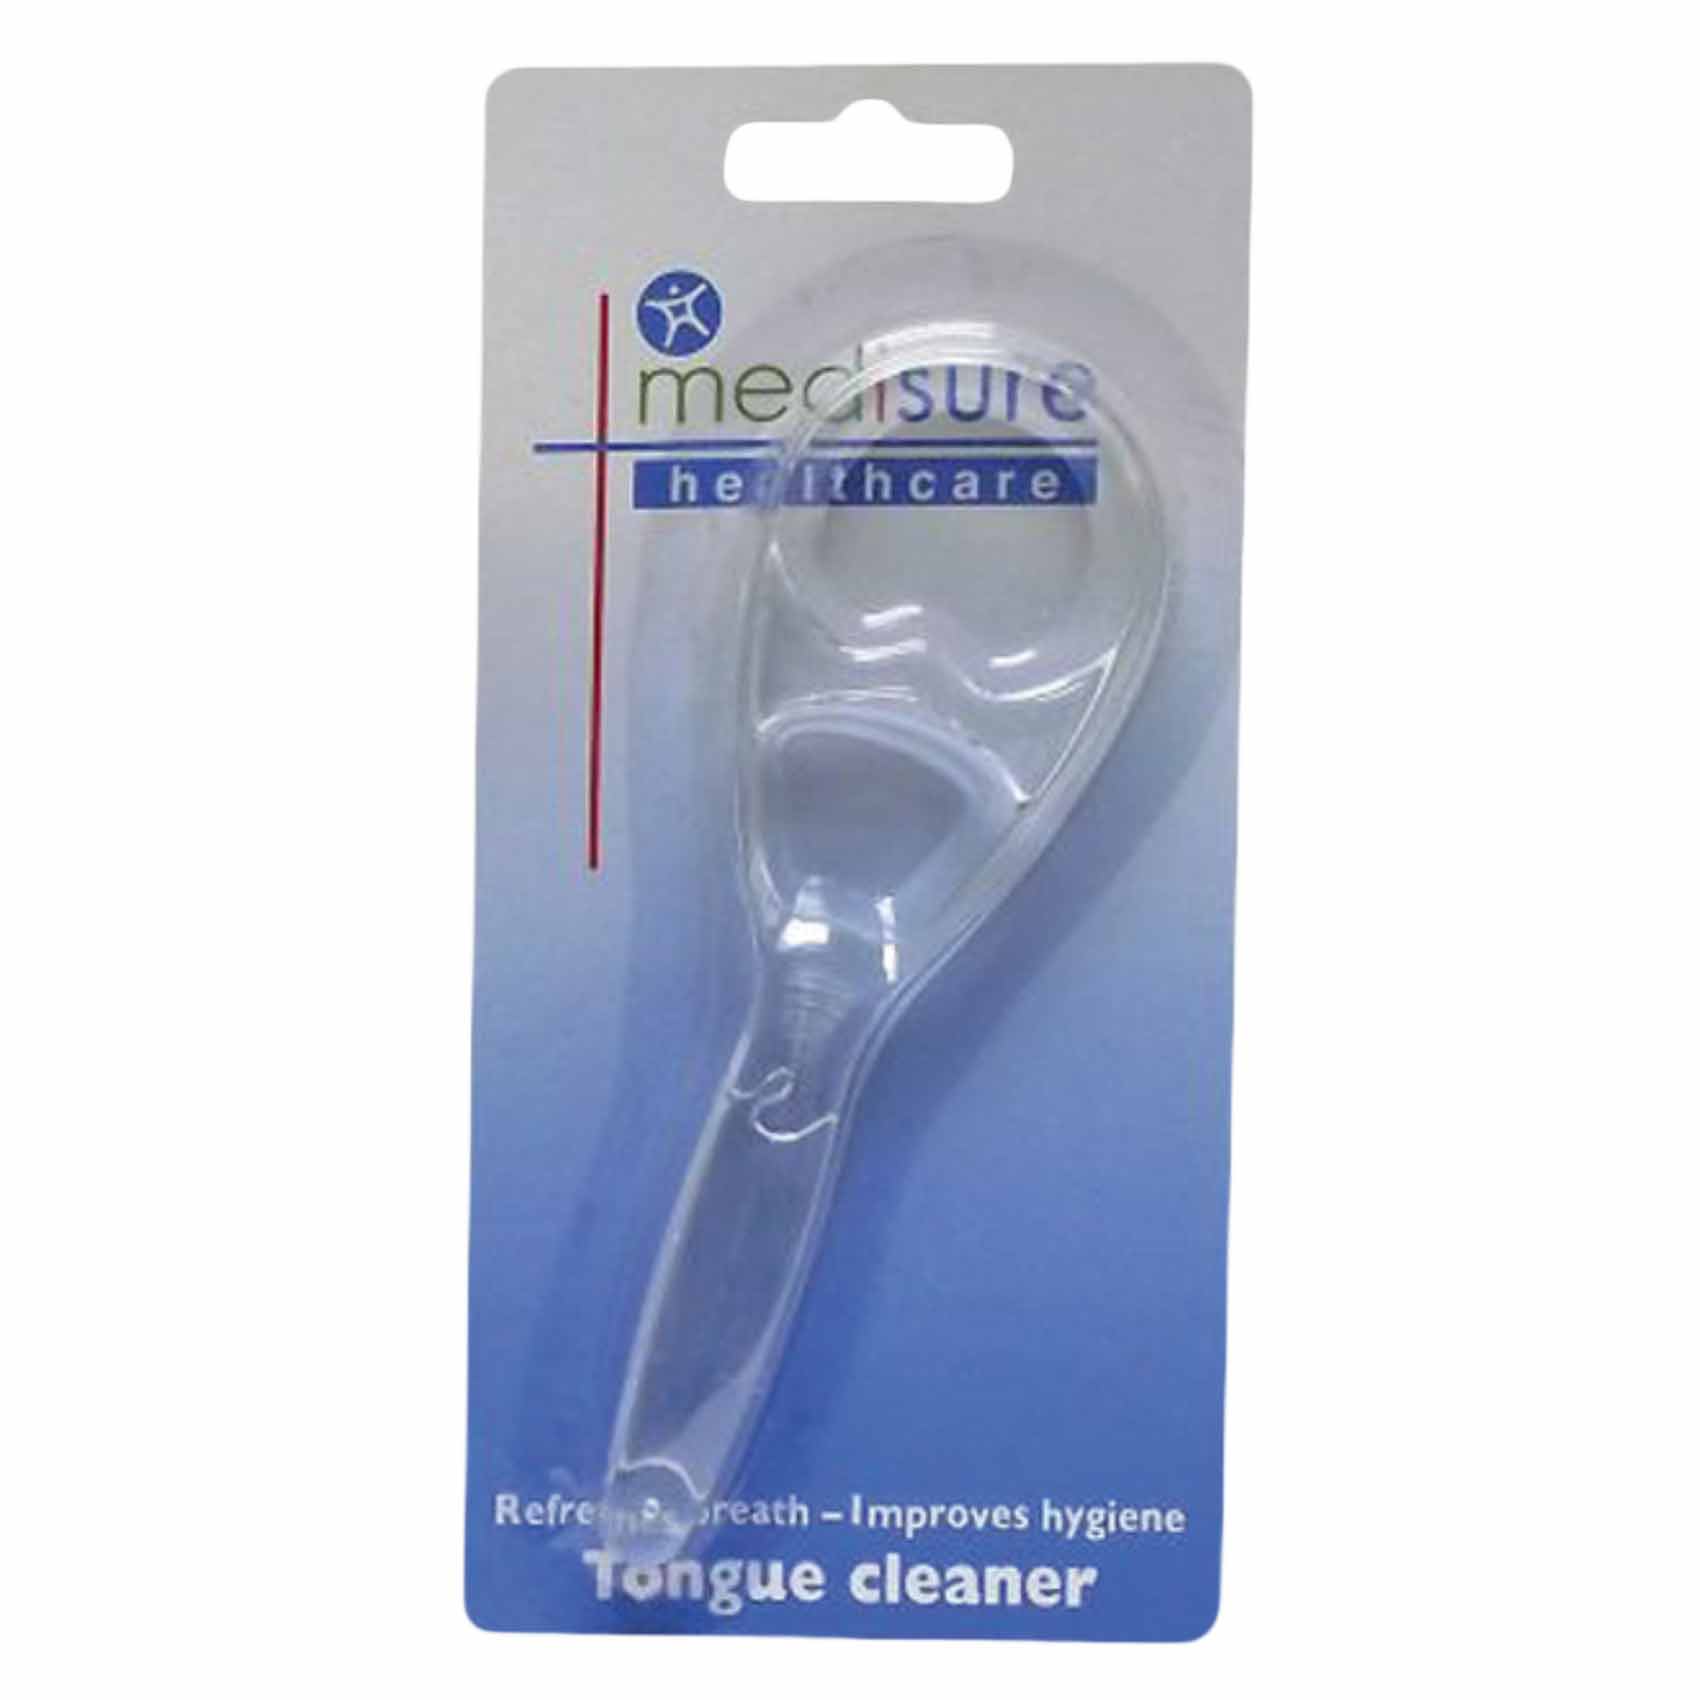 Medisure Tongue Cleaner